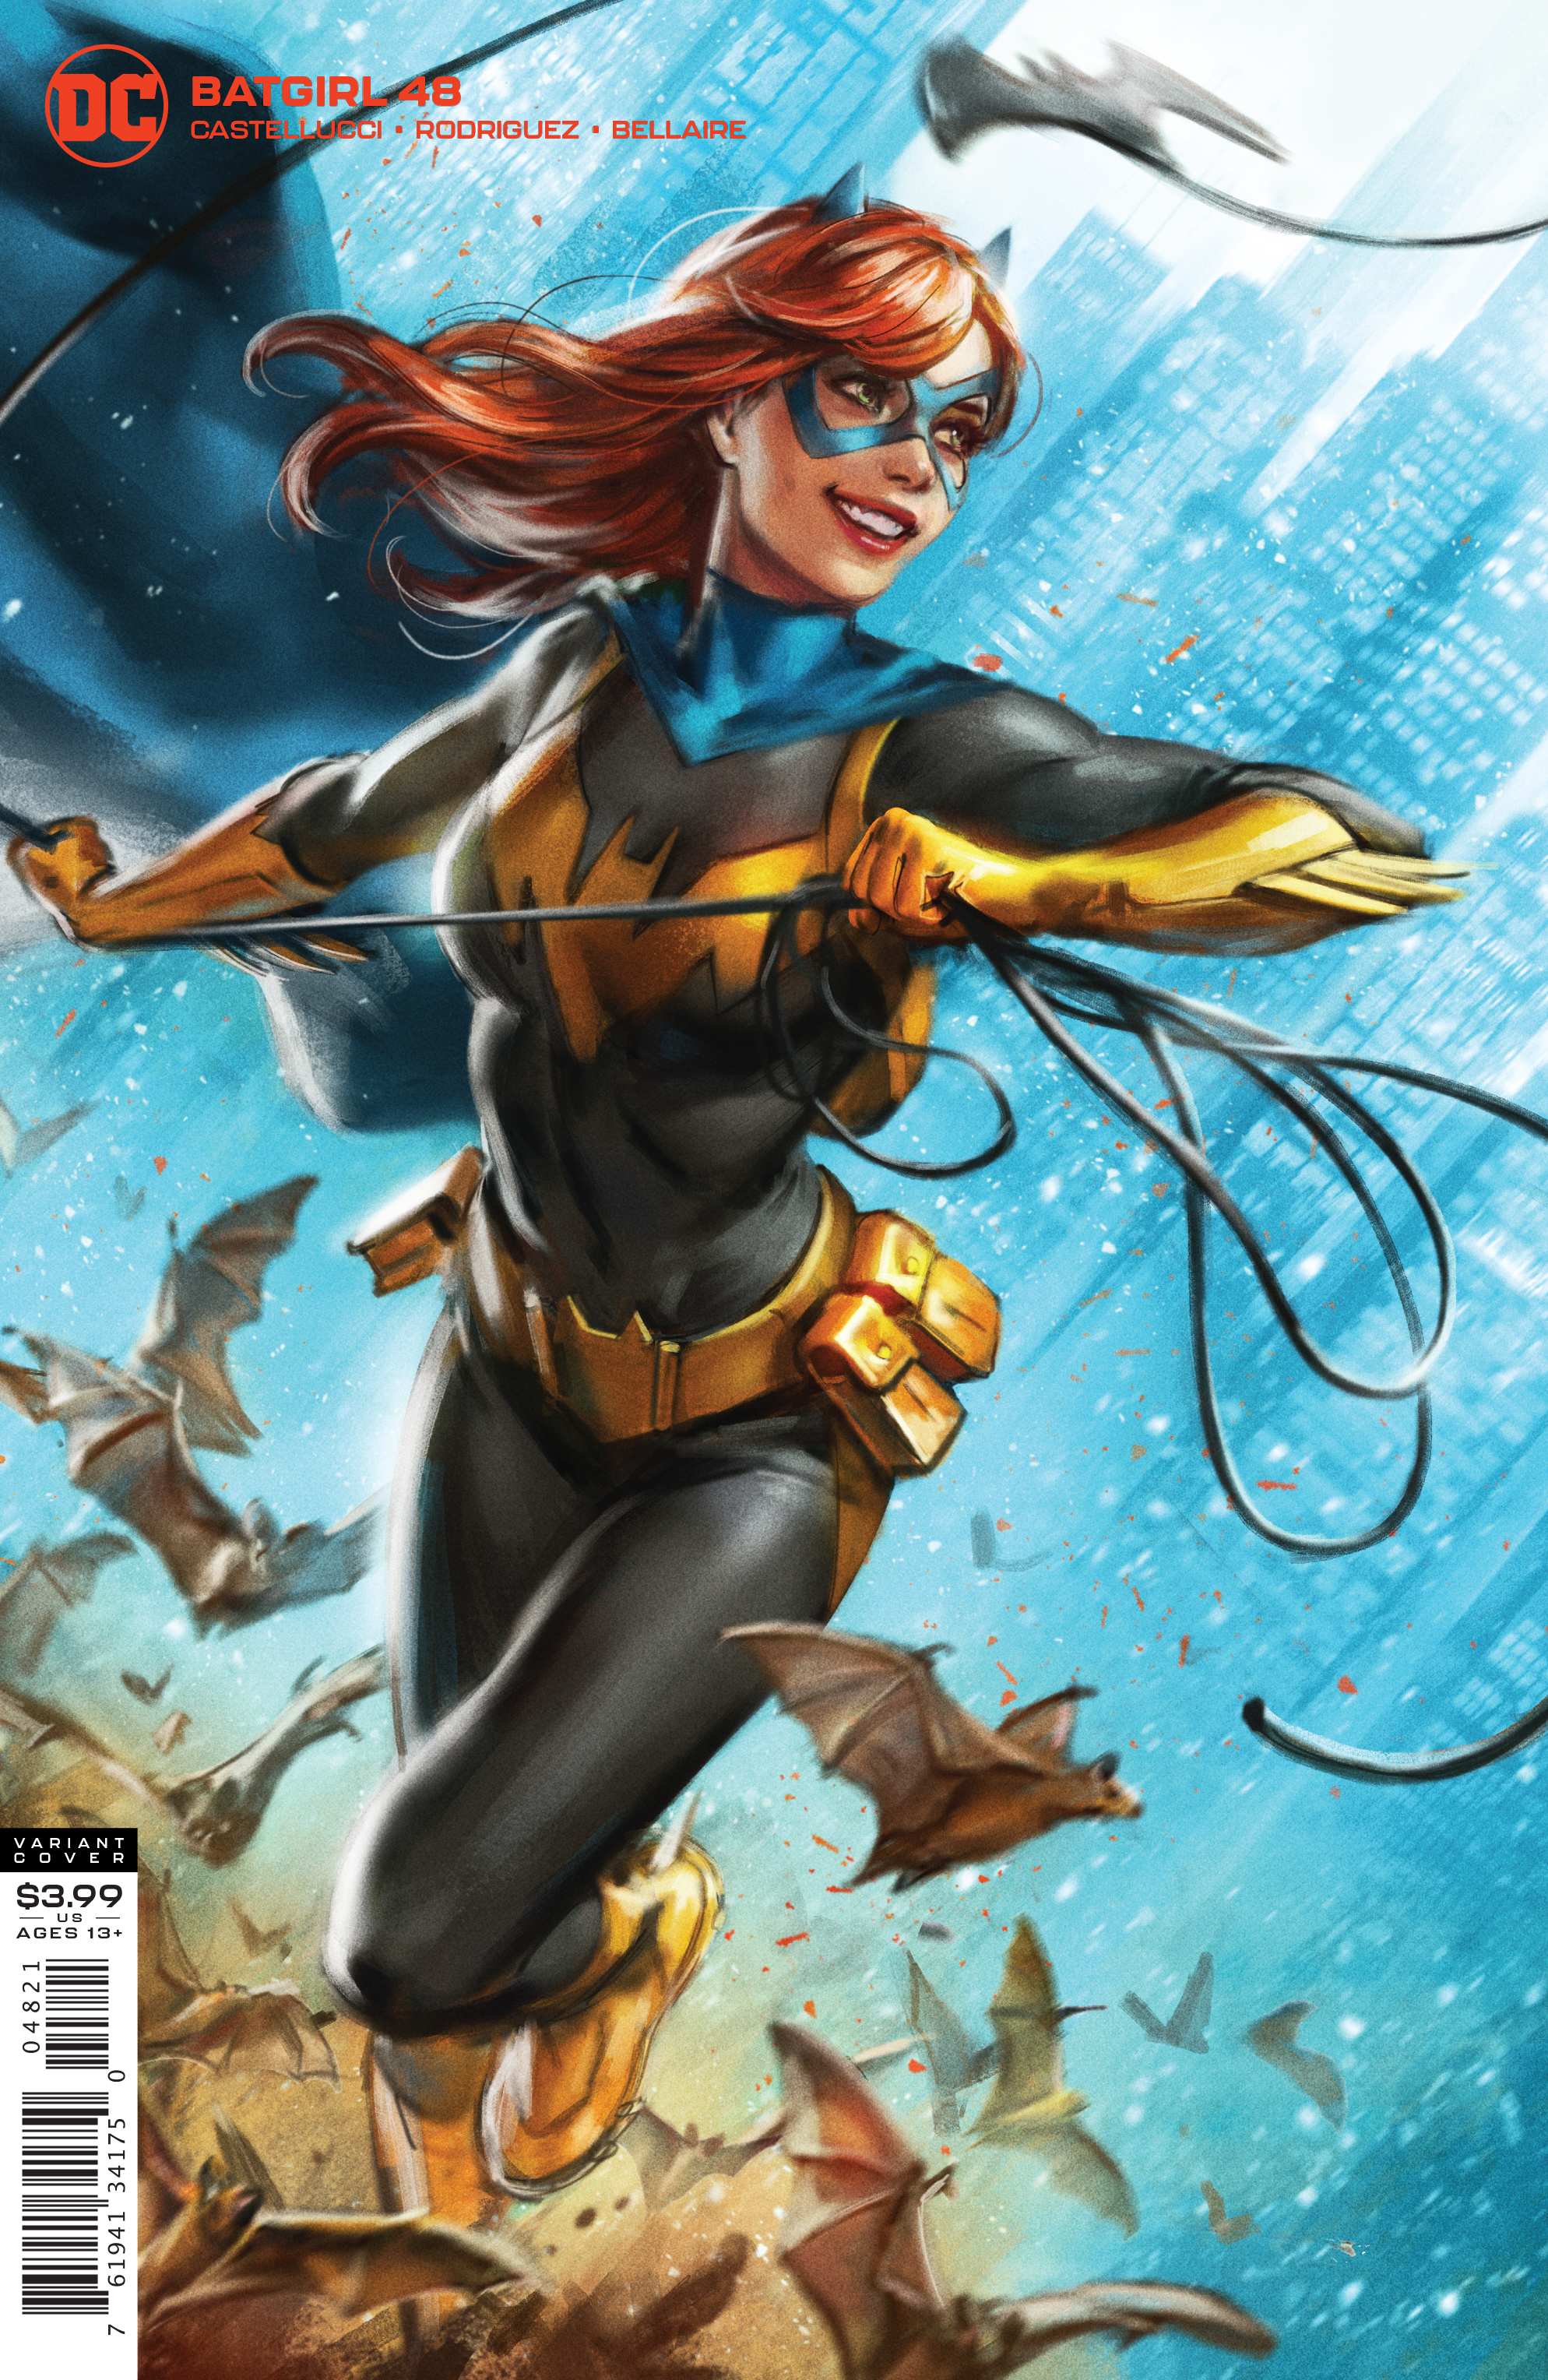 Batgirl #48 Ian McDonald Variant Edition Joker War (2016)